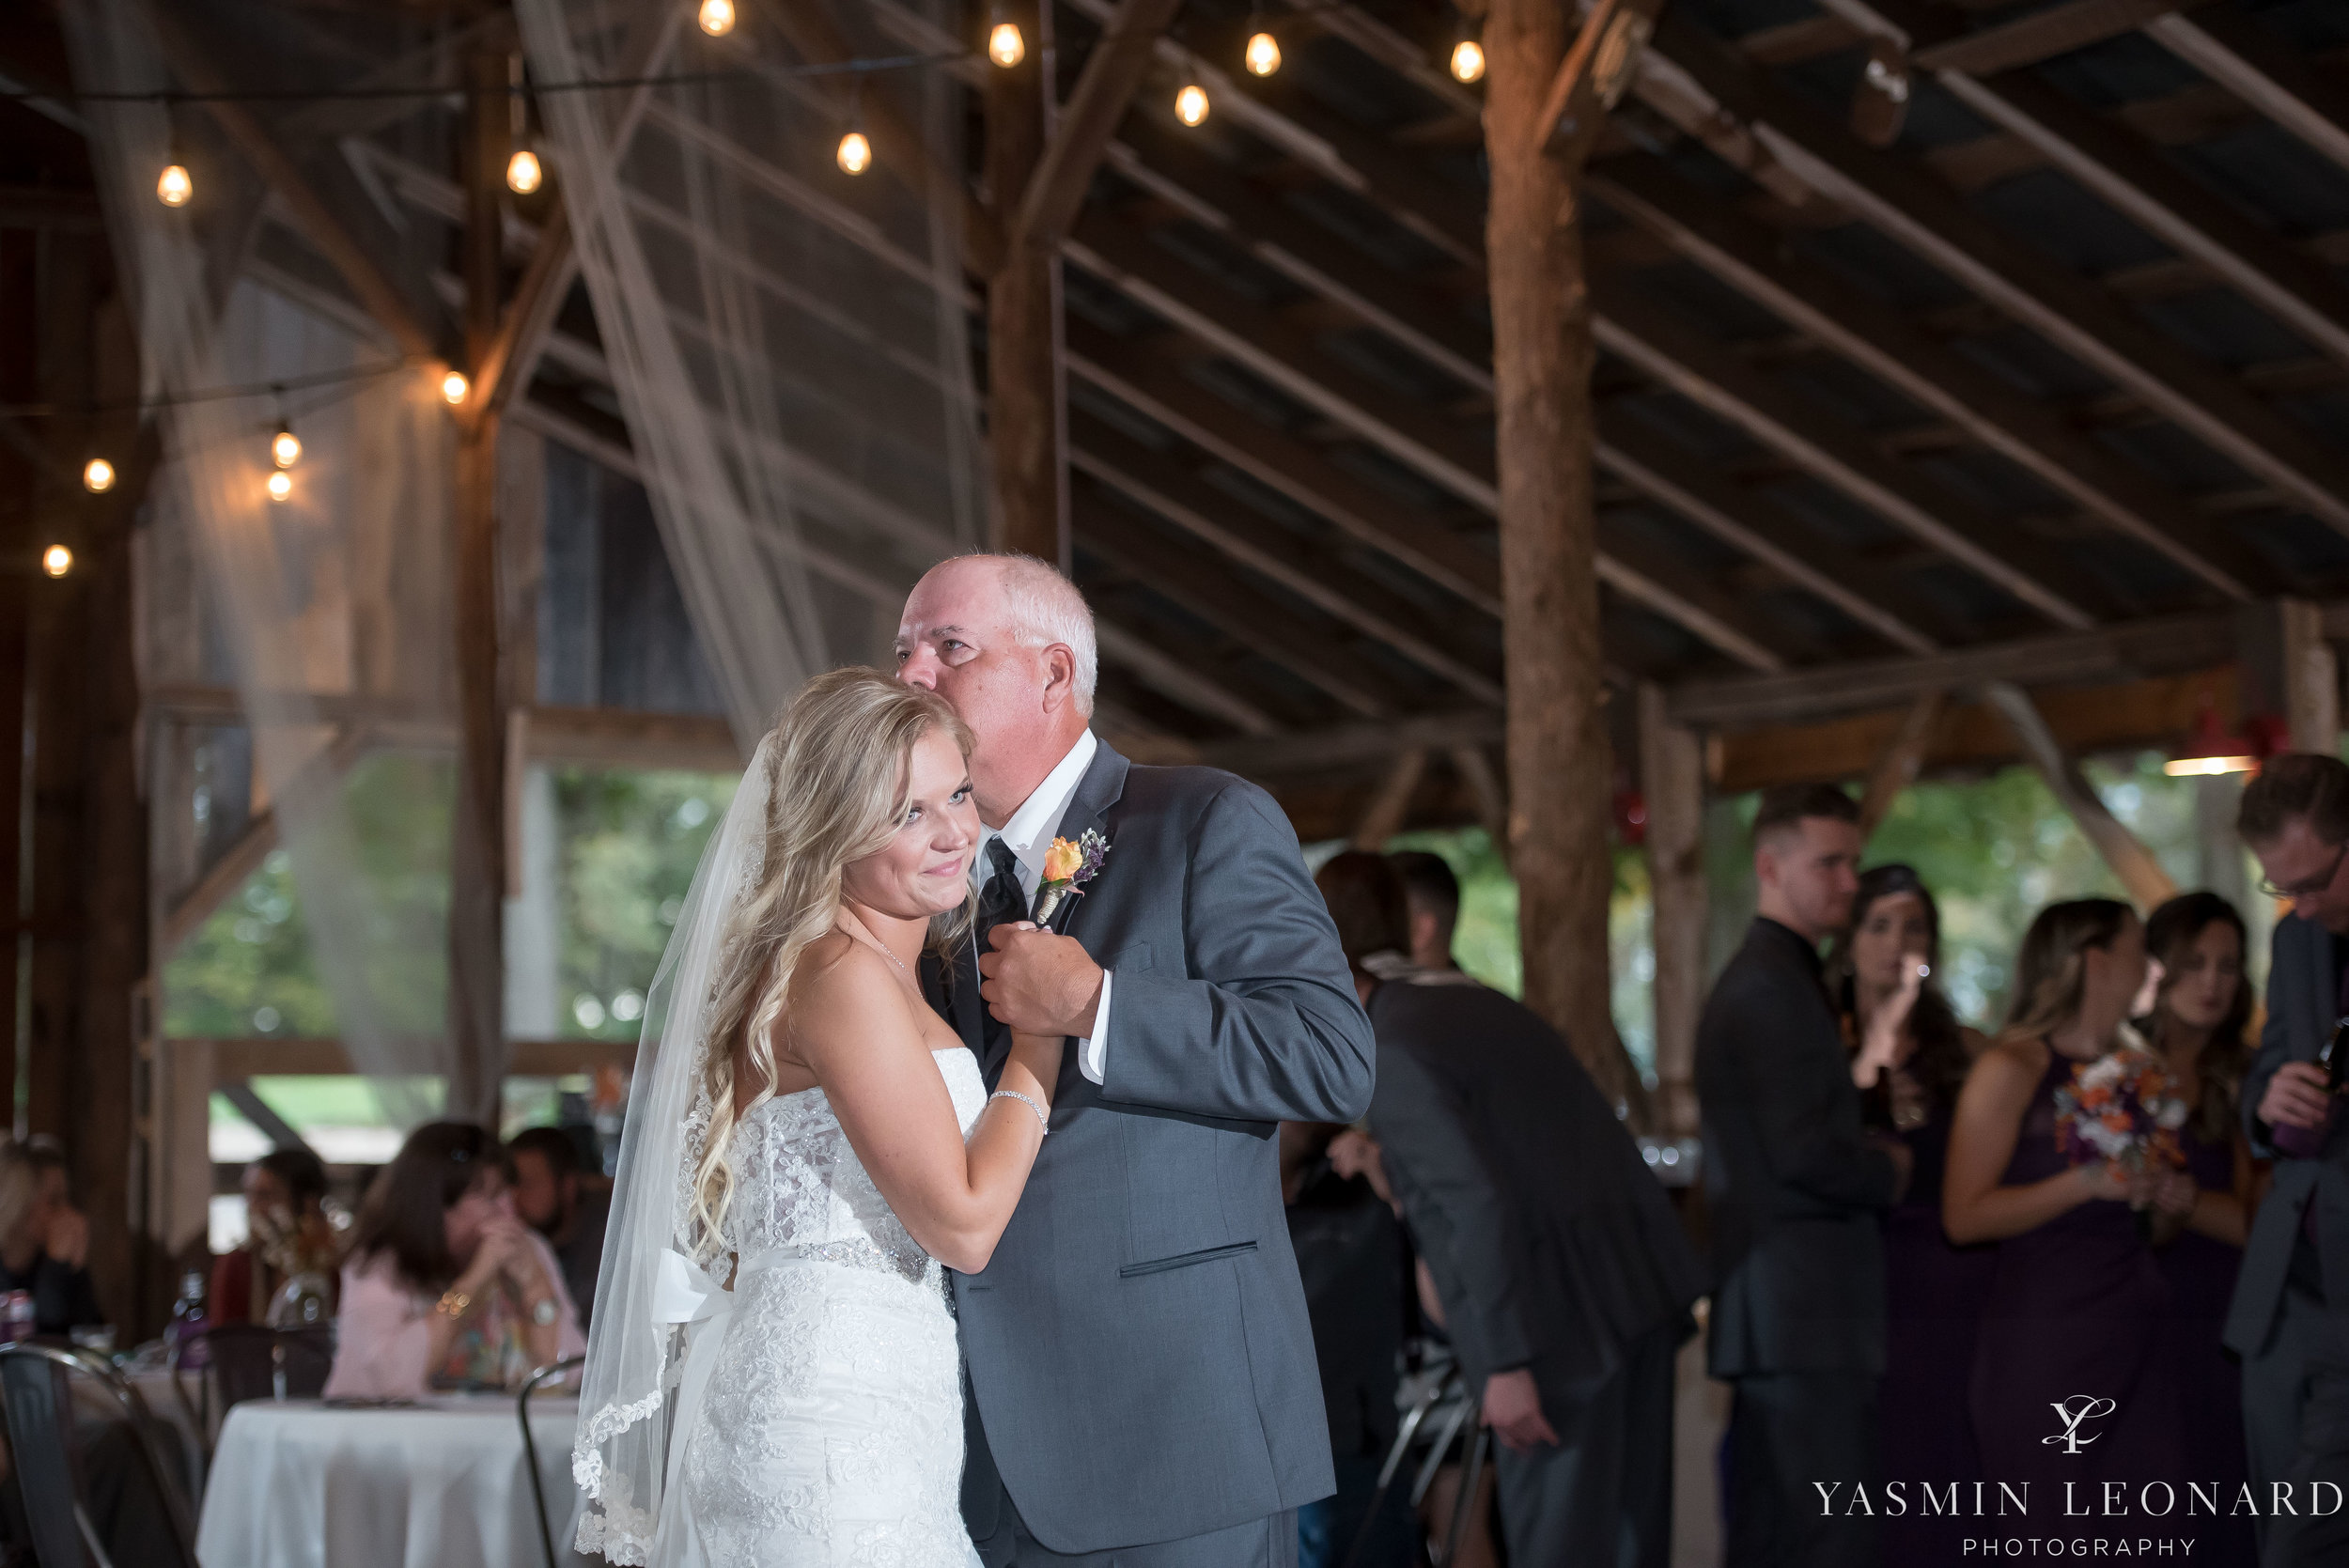 NC Wedding Photographer - Yasmin Leonard Photography - Summerfield Farms - High Point Wedding Photographer - Labri at Linwood - Barns in North Carolina - NC Barn Wedding-66.jpg